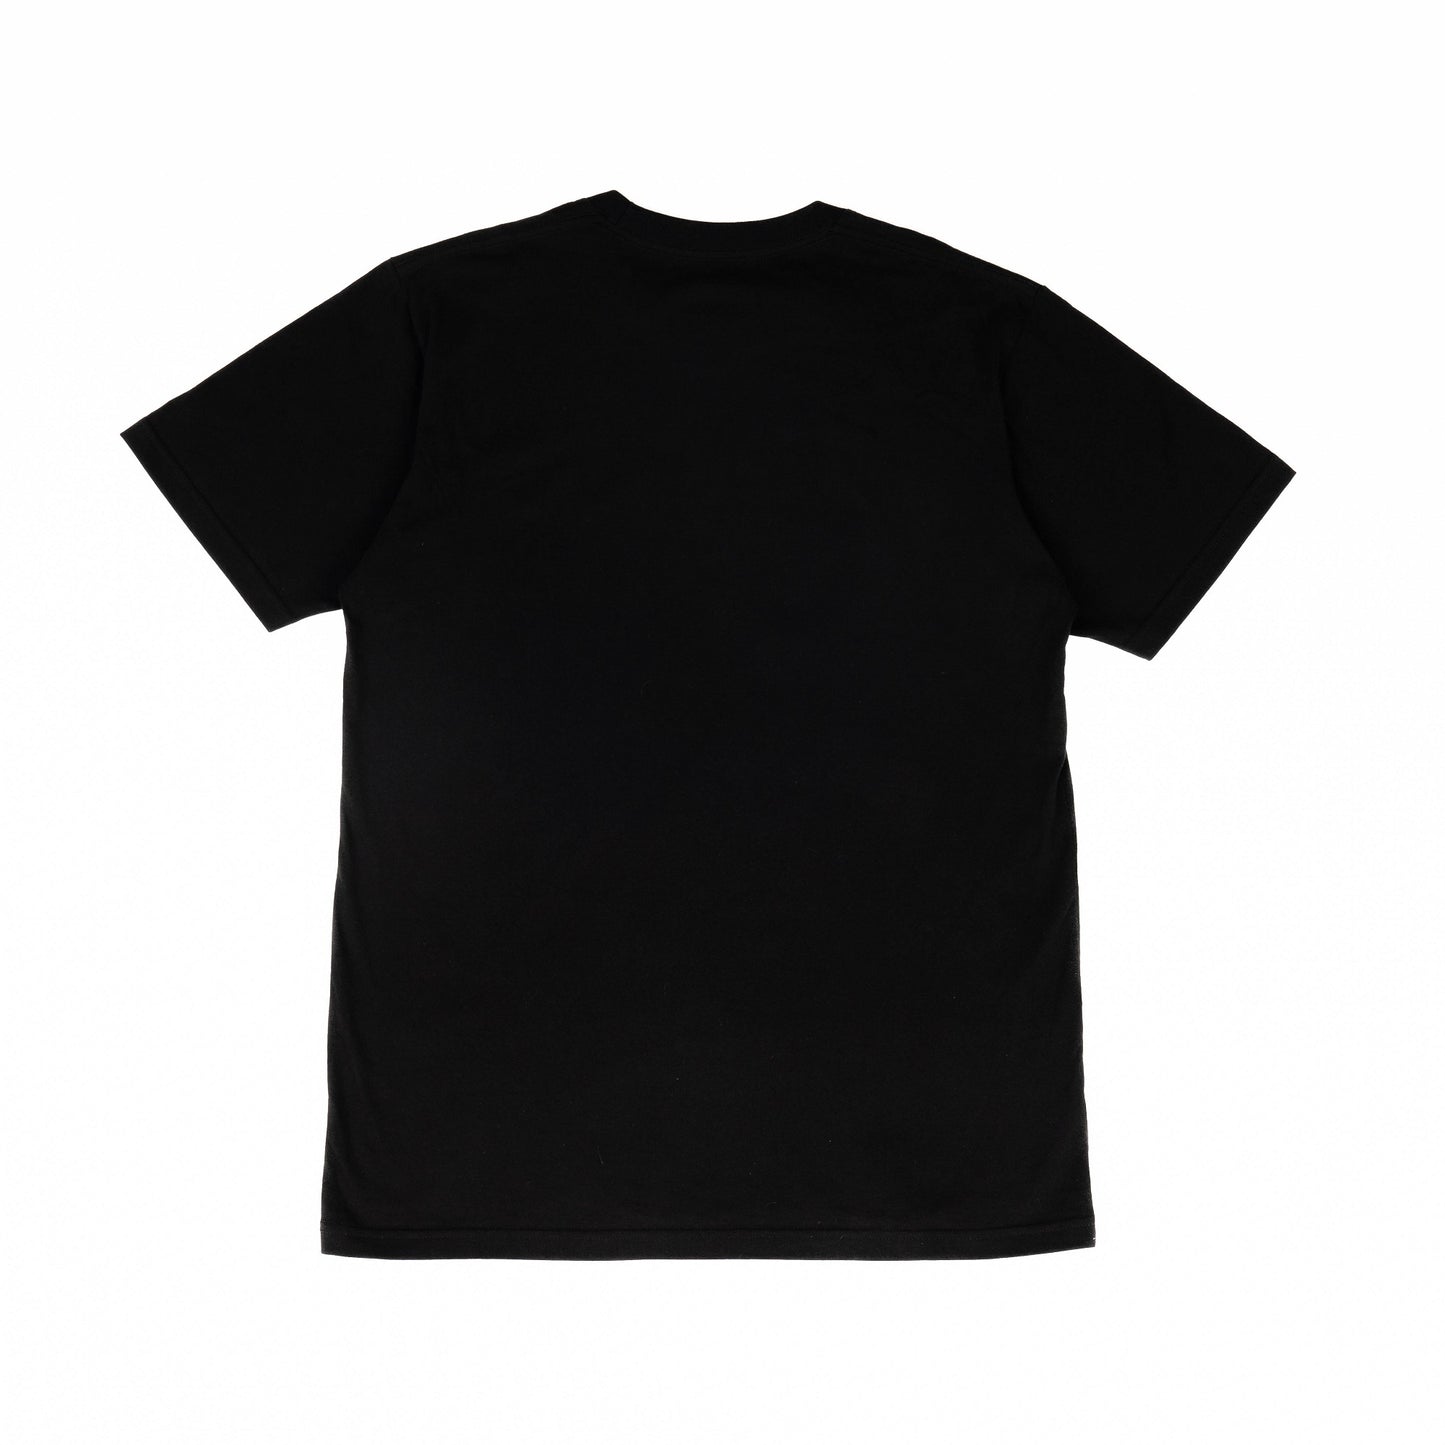 AZA x SAC T-Shirt Crosswise Edition - Black